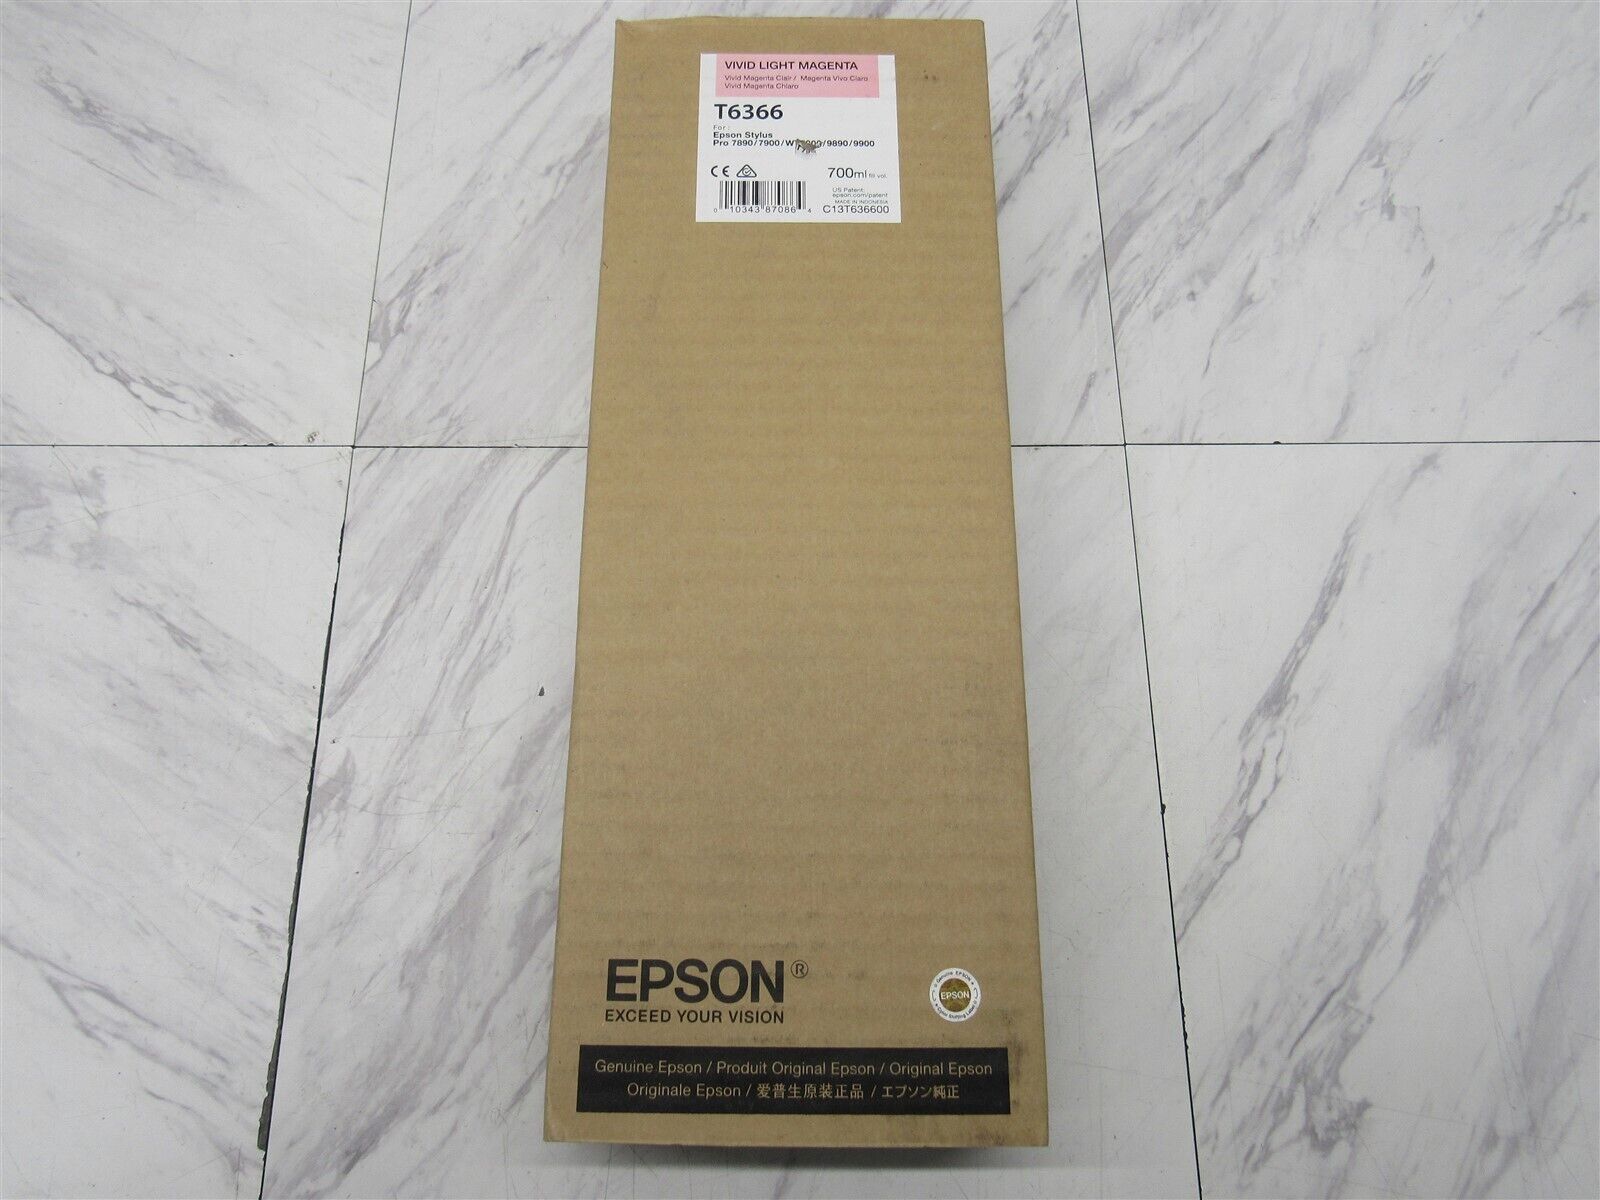 NEW Epson T6366 Vivid Light Magenta Ink Cartridge Stylus Pro 7900/9900 EXP:06/18